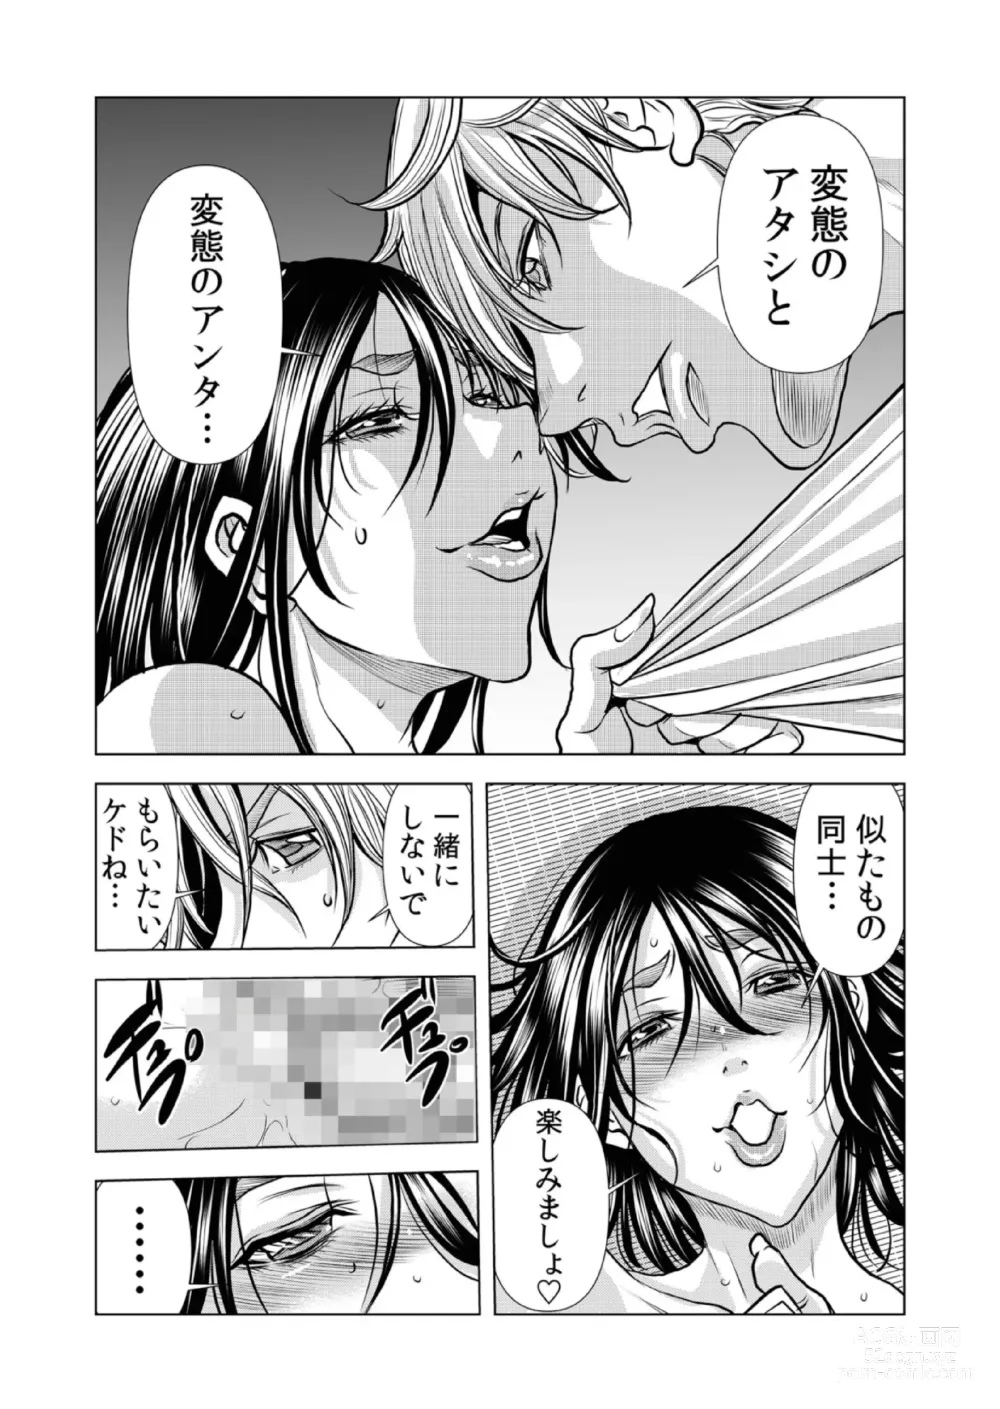 Page 13 of manga Mamasan,yobai ha OK desuka? VOL10